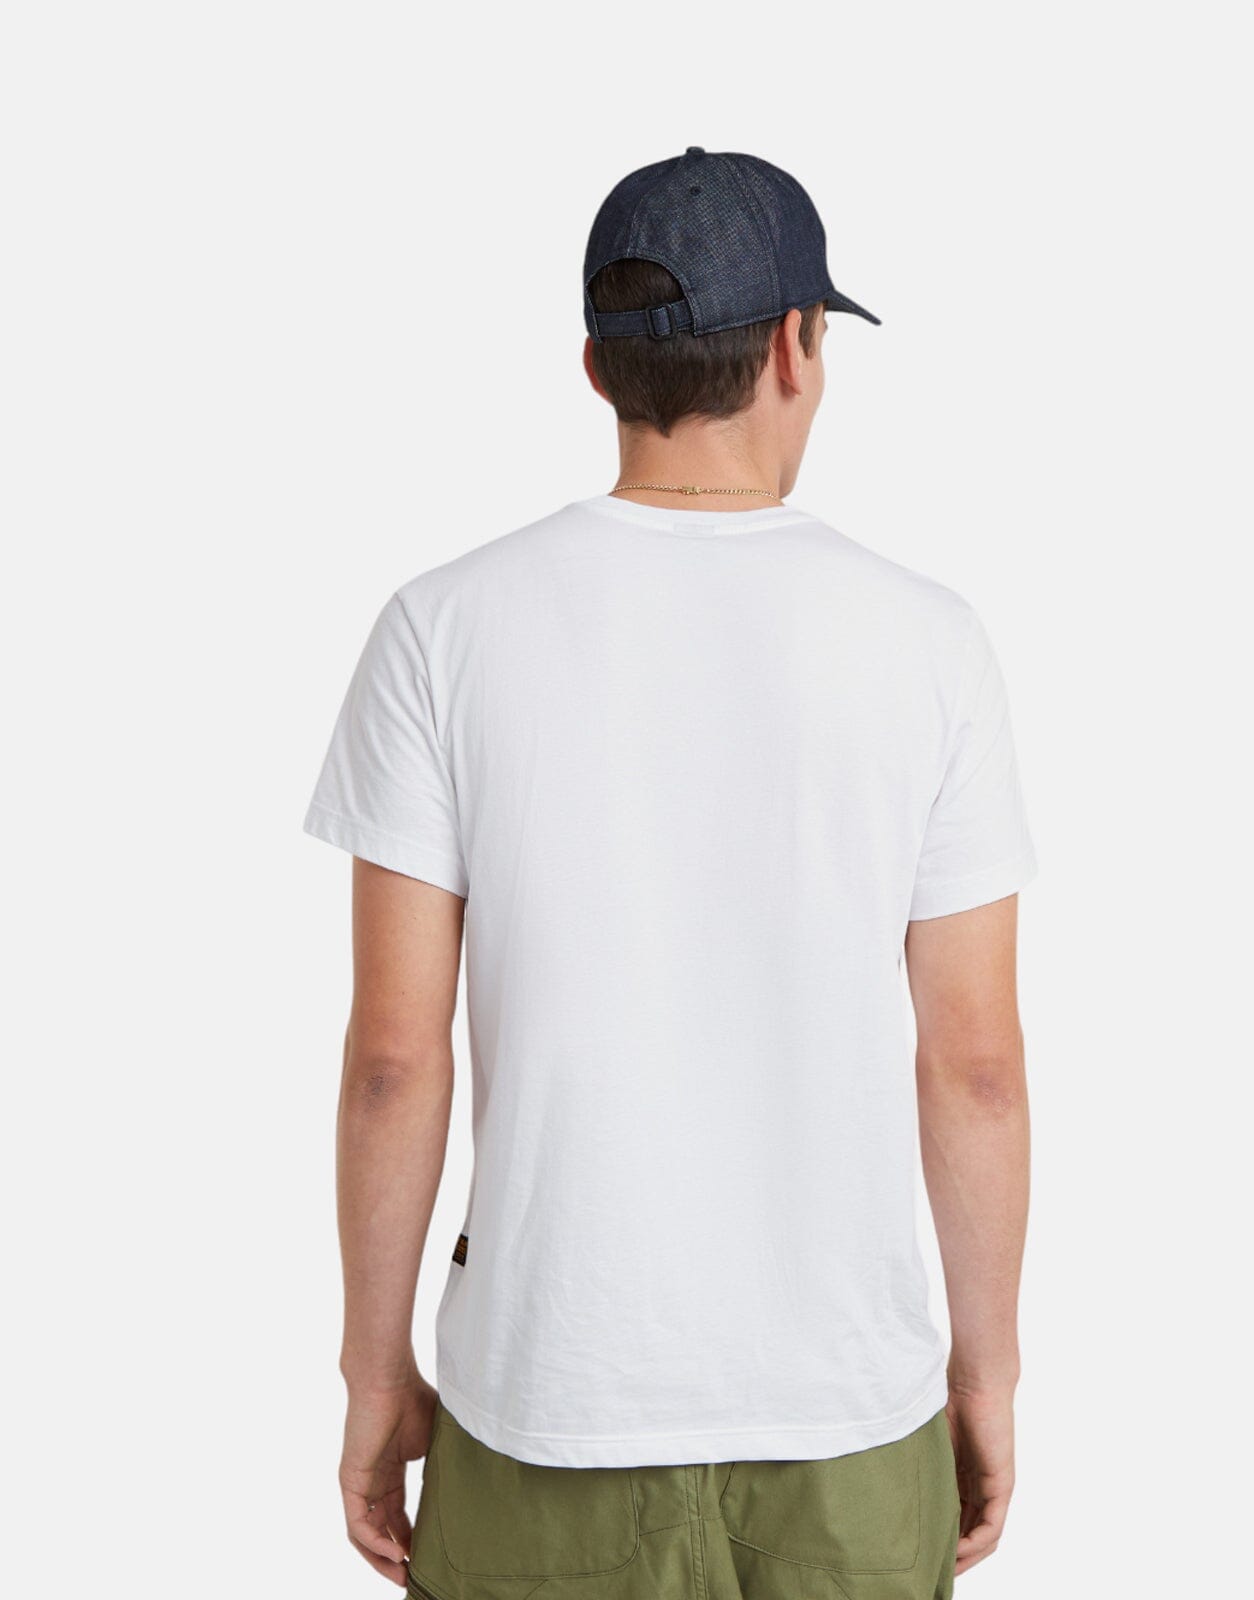 G-Star RAW Palm Originals White T-Shirt - Subwear